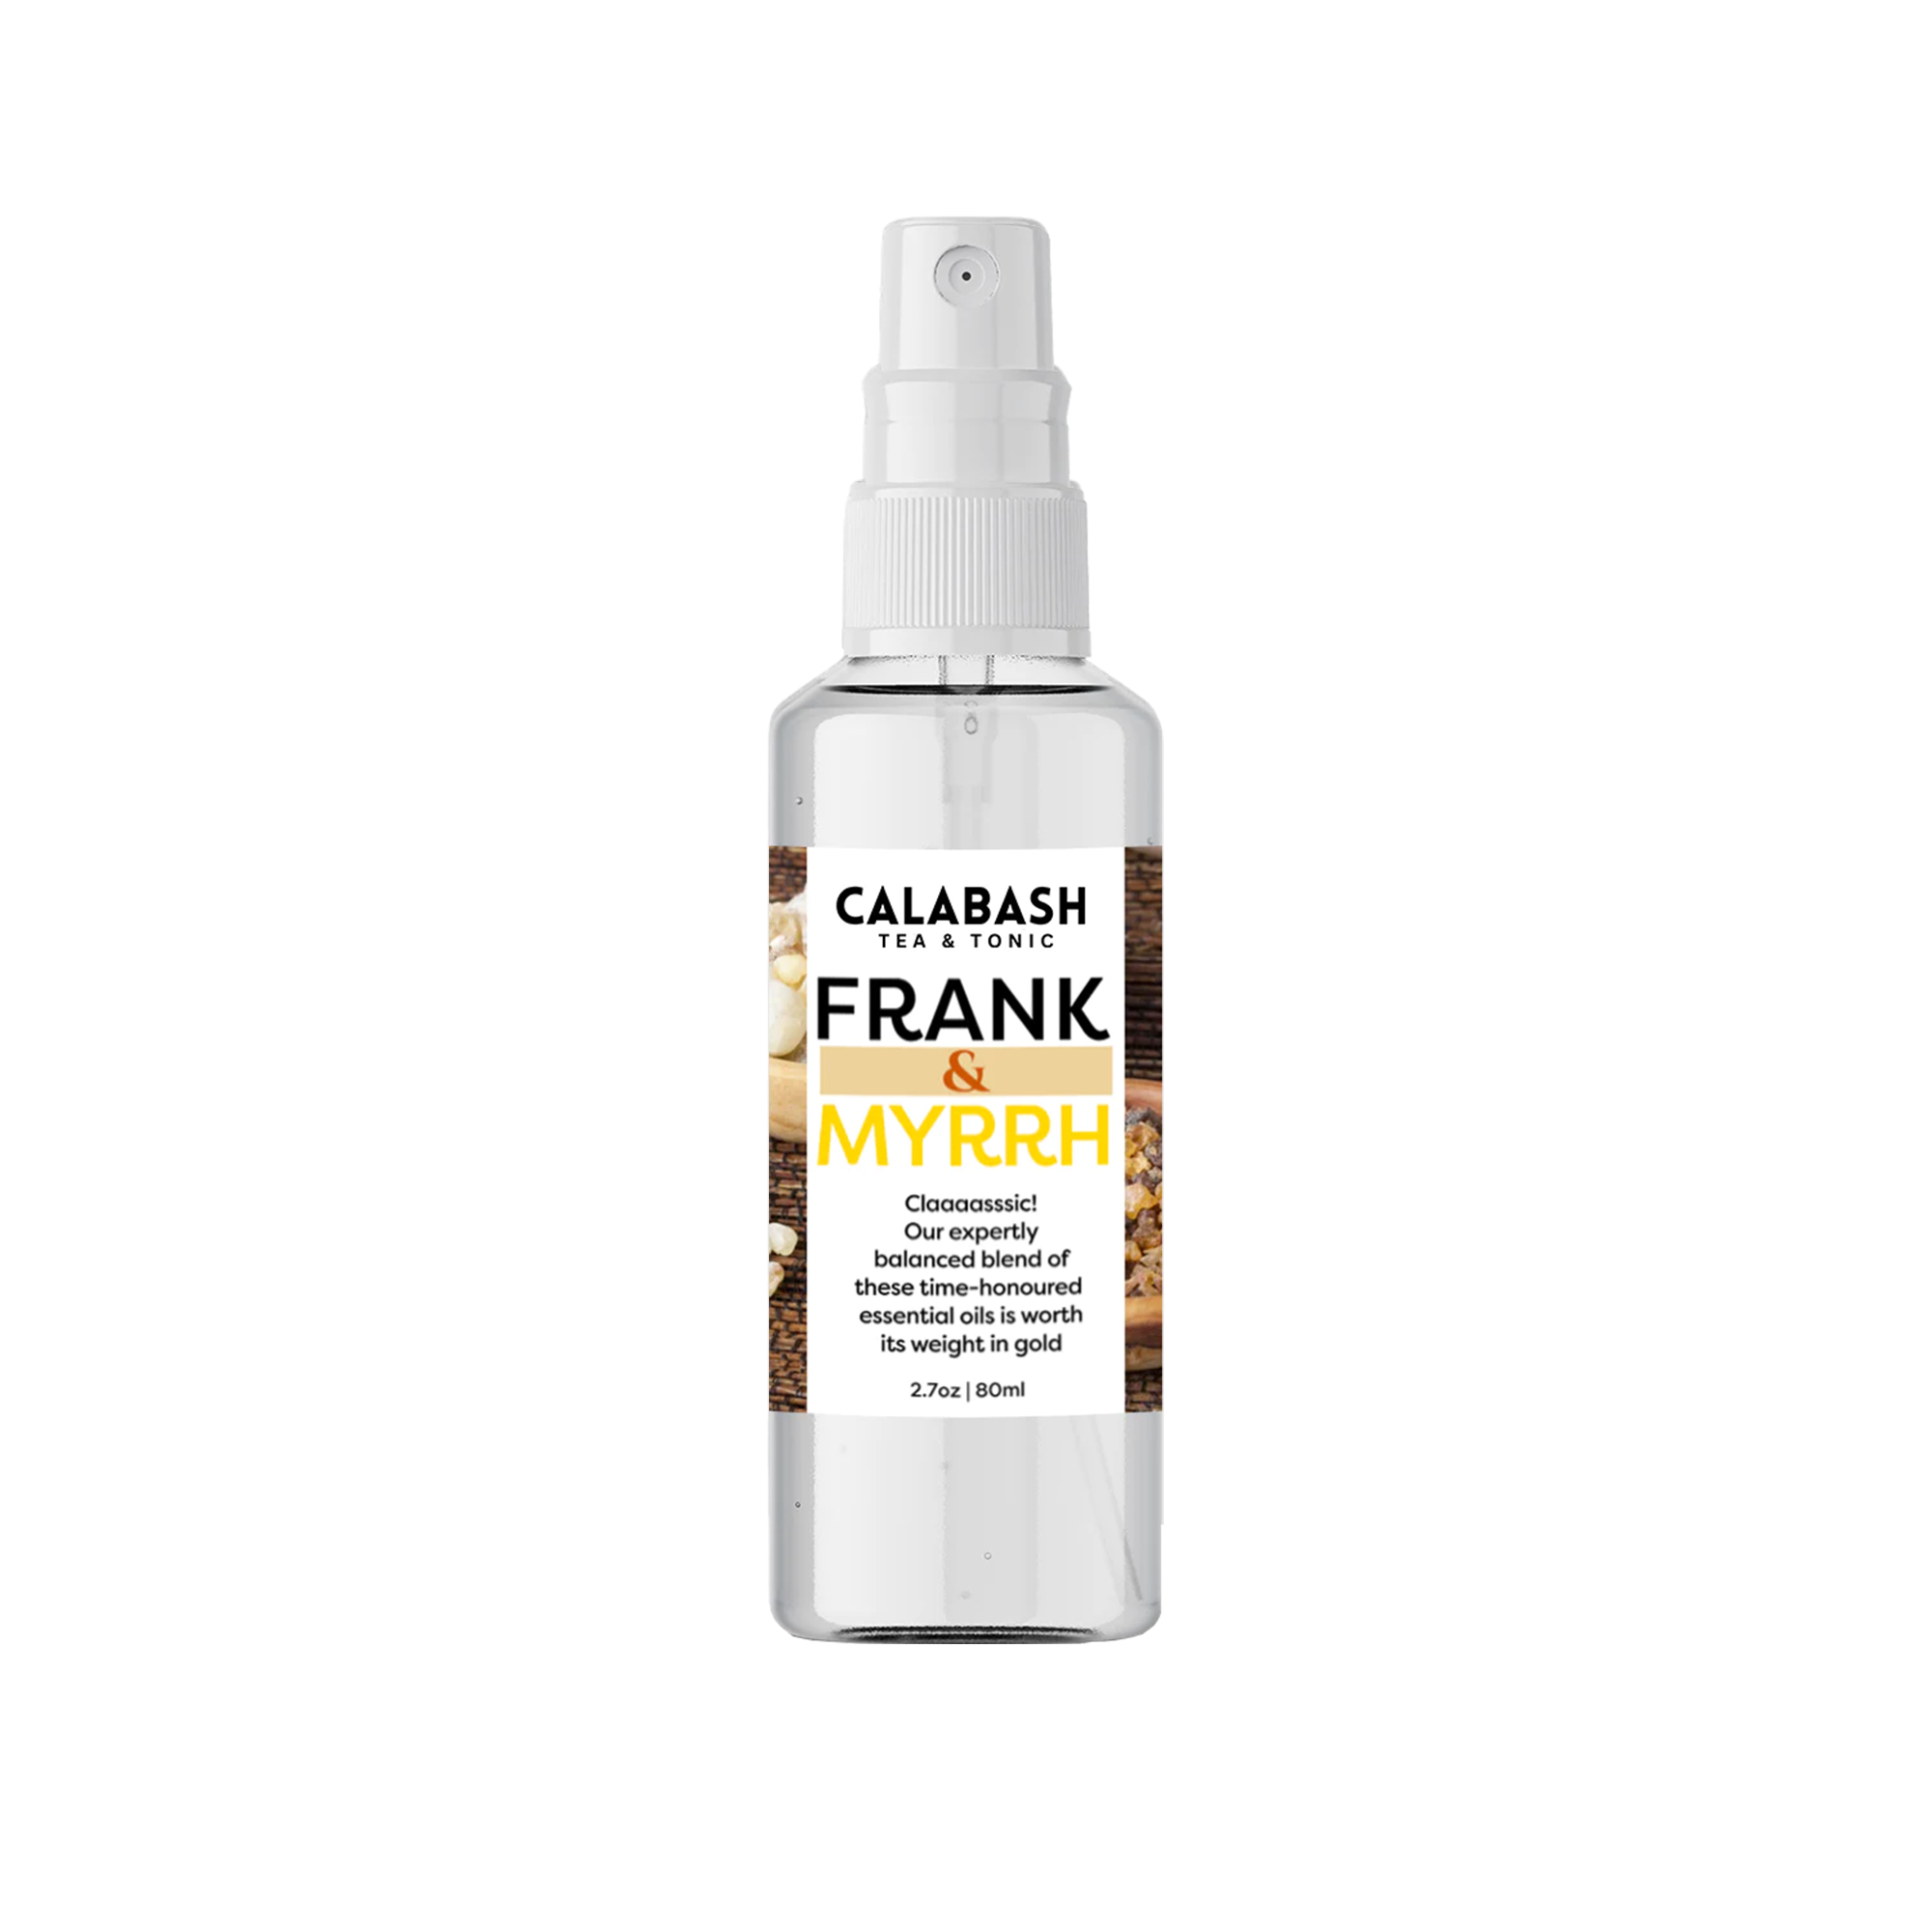 FRANK & MYRRH: expertly balanced room and body spray w/ essential oils!